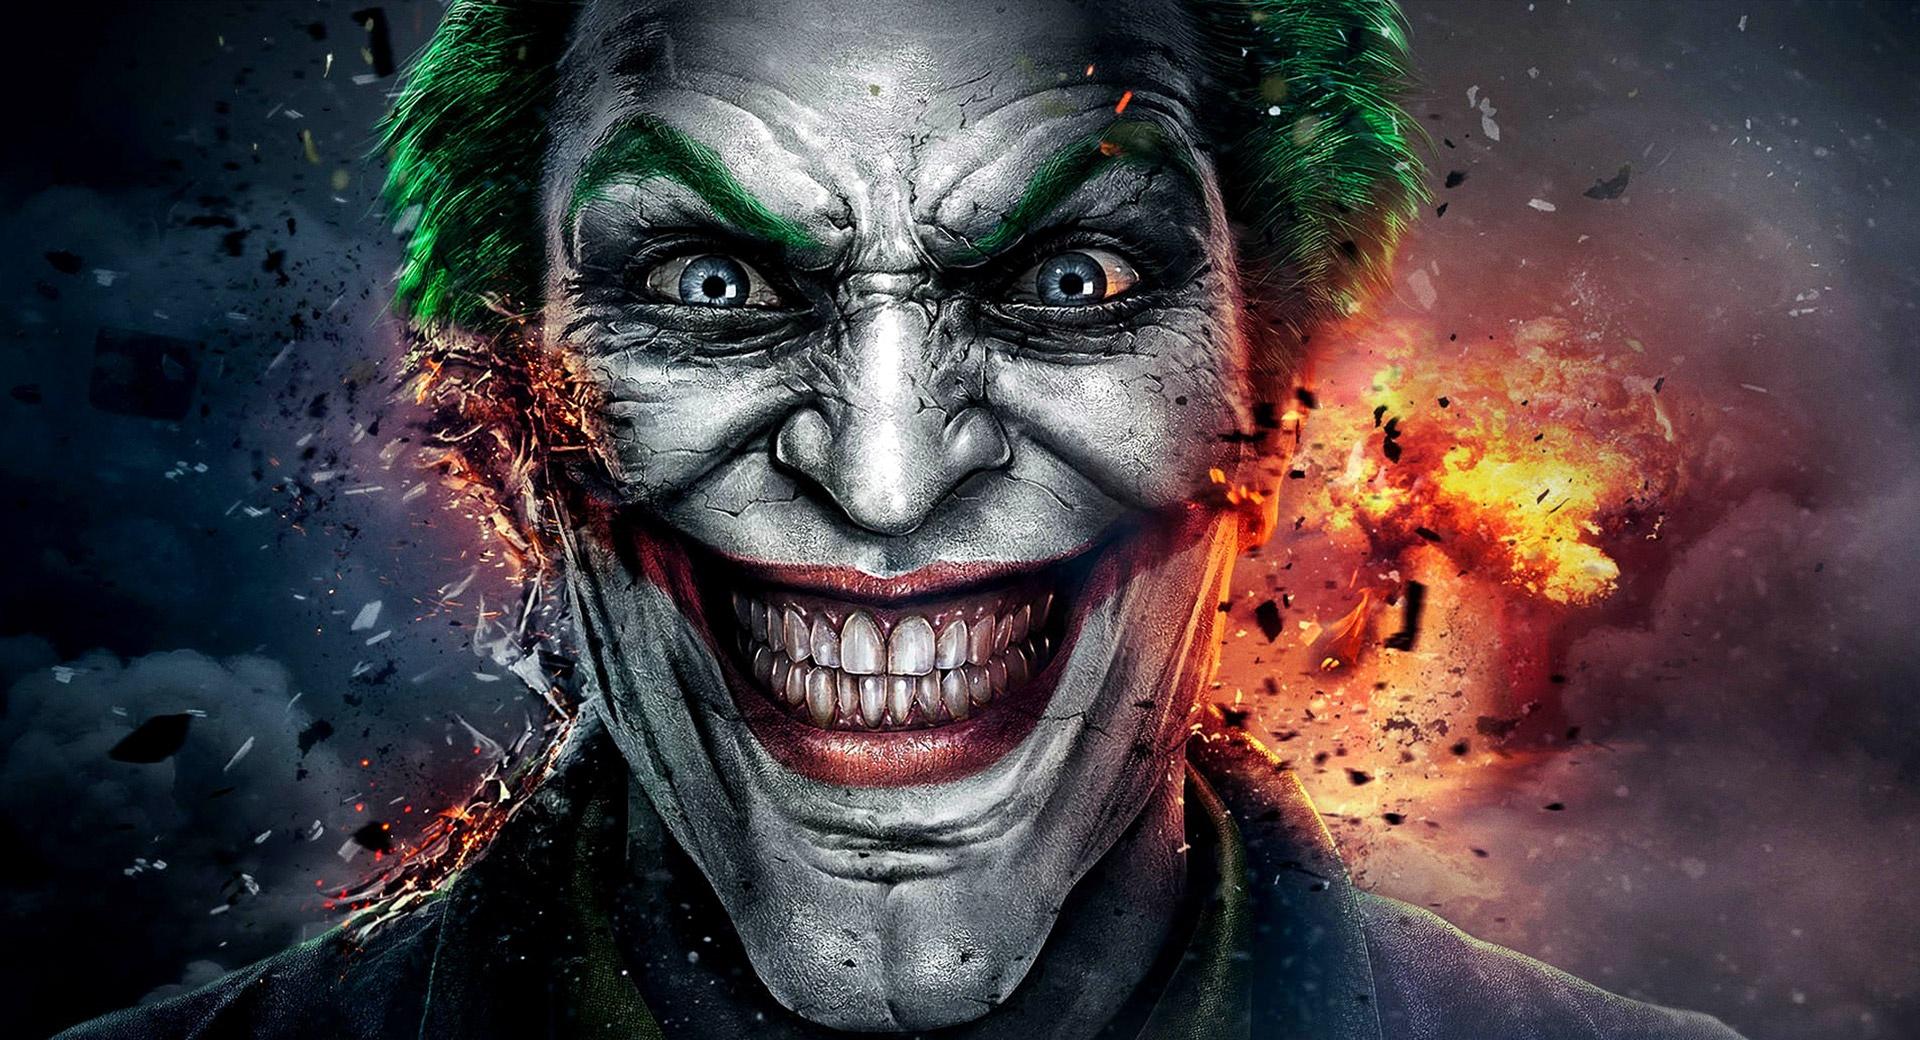 Injustice God Among Us Joker Face 2048 x 2048 iPad wallpaper download